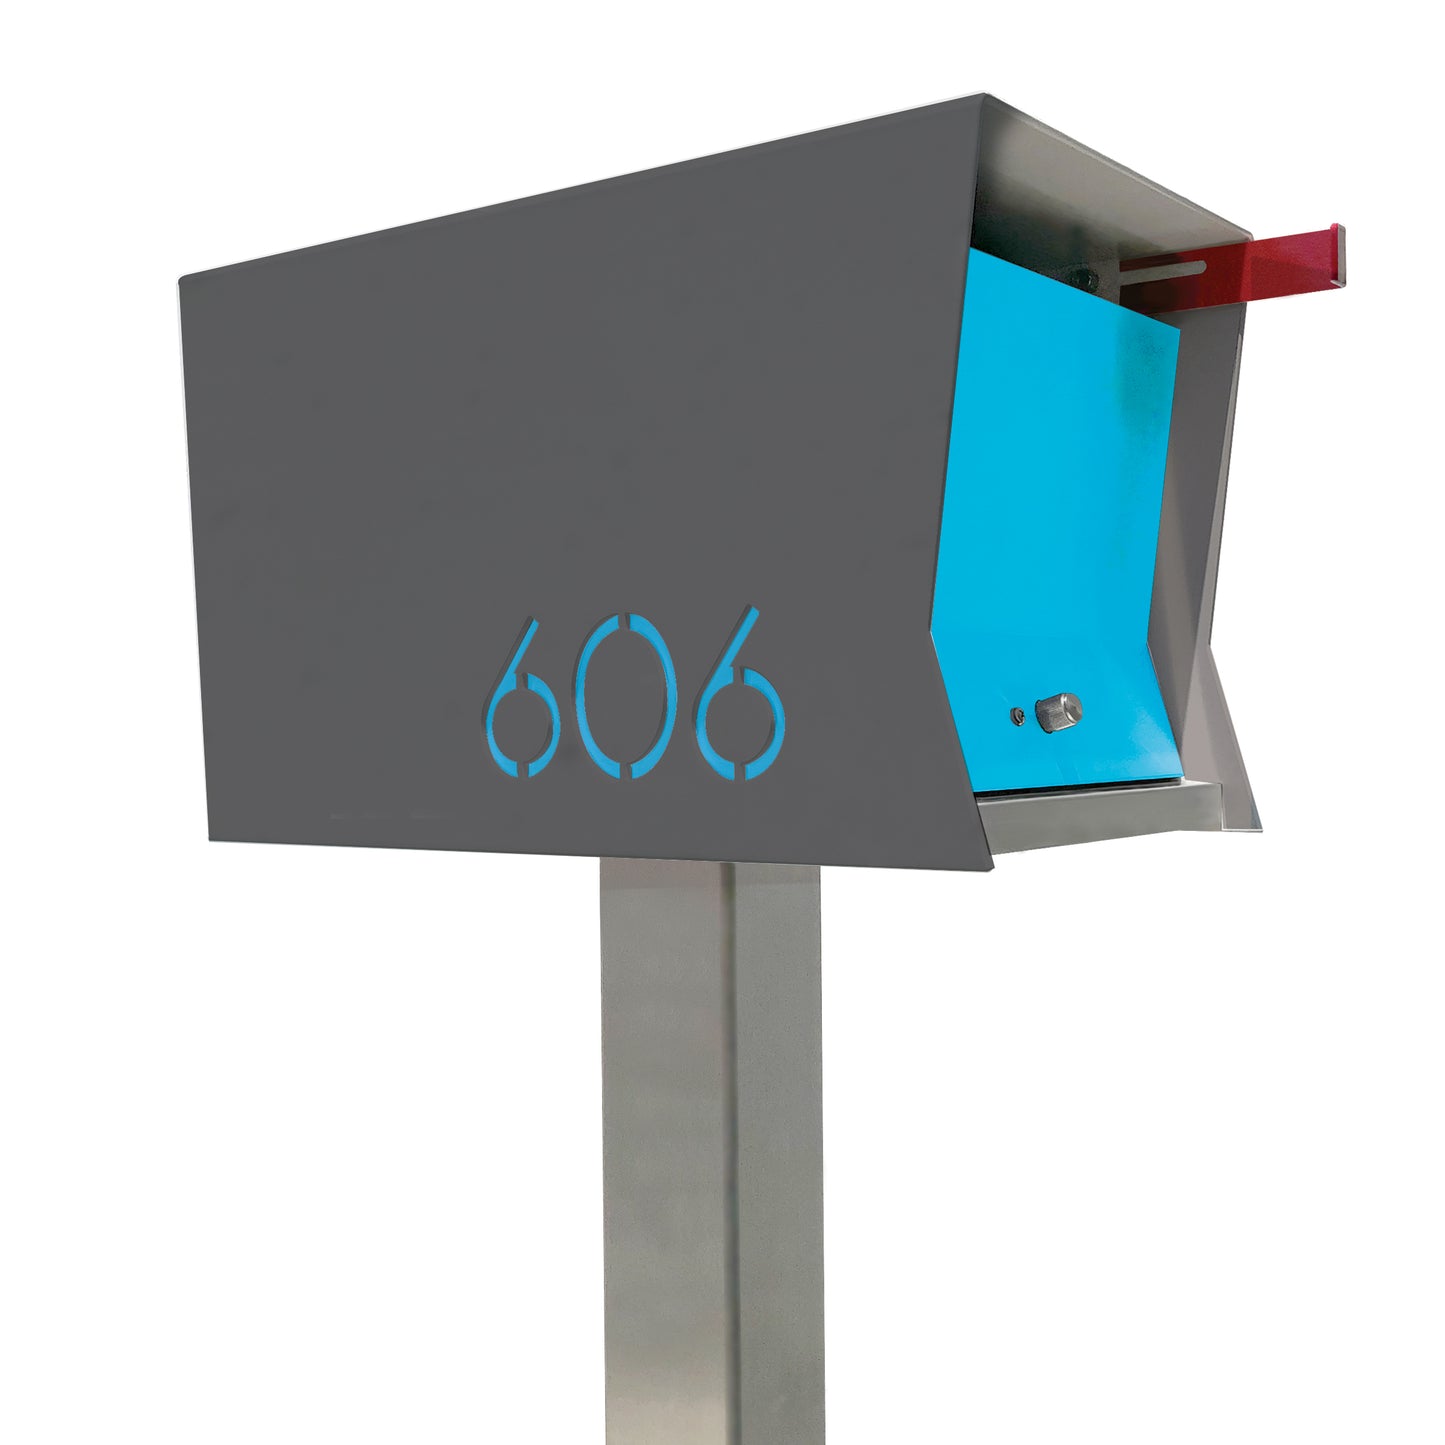 The Original Retrobox in DESIGNER GRAY - Modern Mailbox grey and cyan